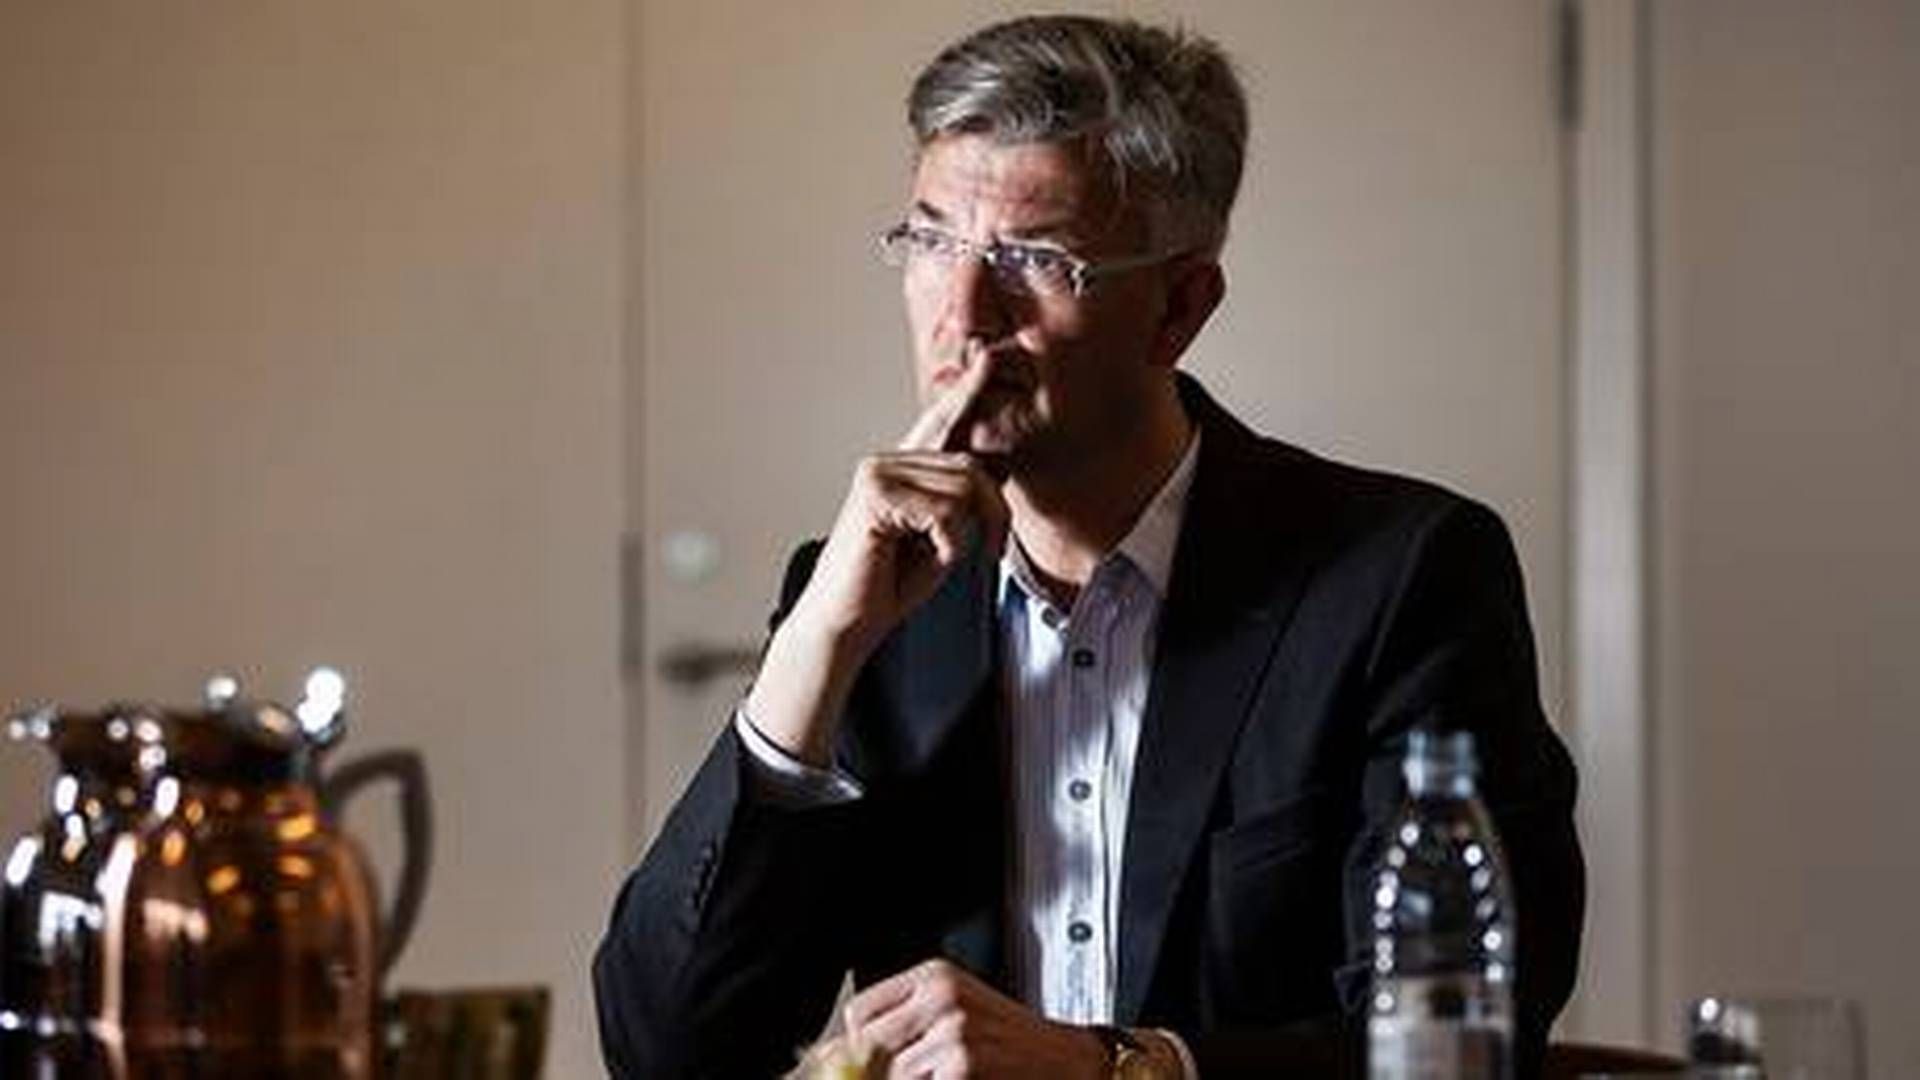 Allan Polack, CEO of PFA. | Photo: Niels Hougaard/Jyllands-Posten/Ritzau Scanpix